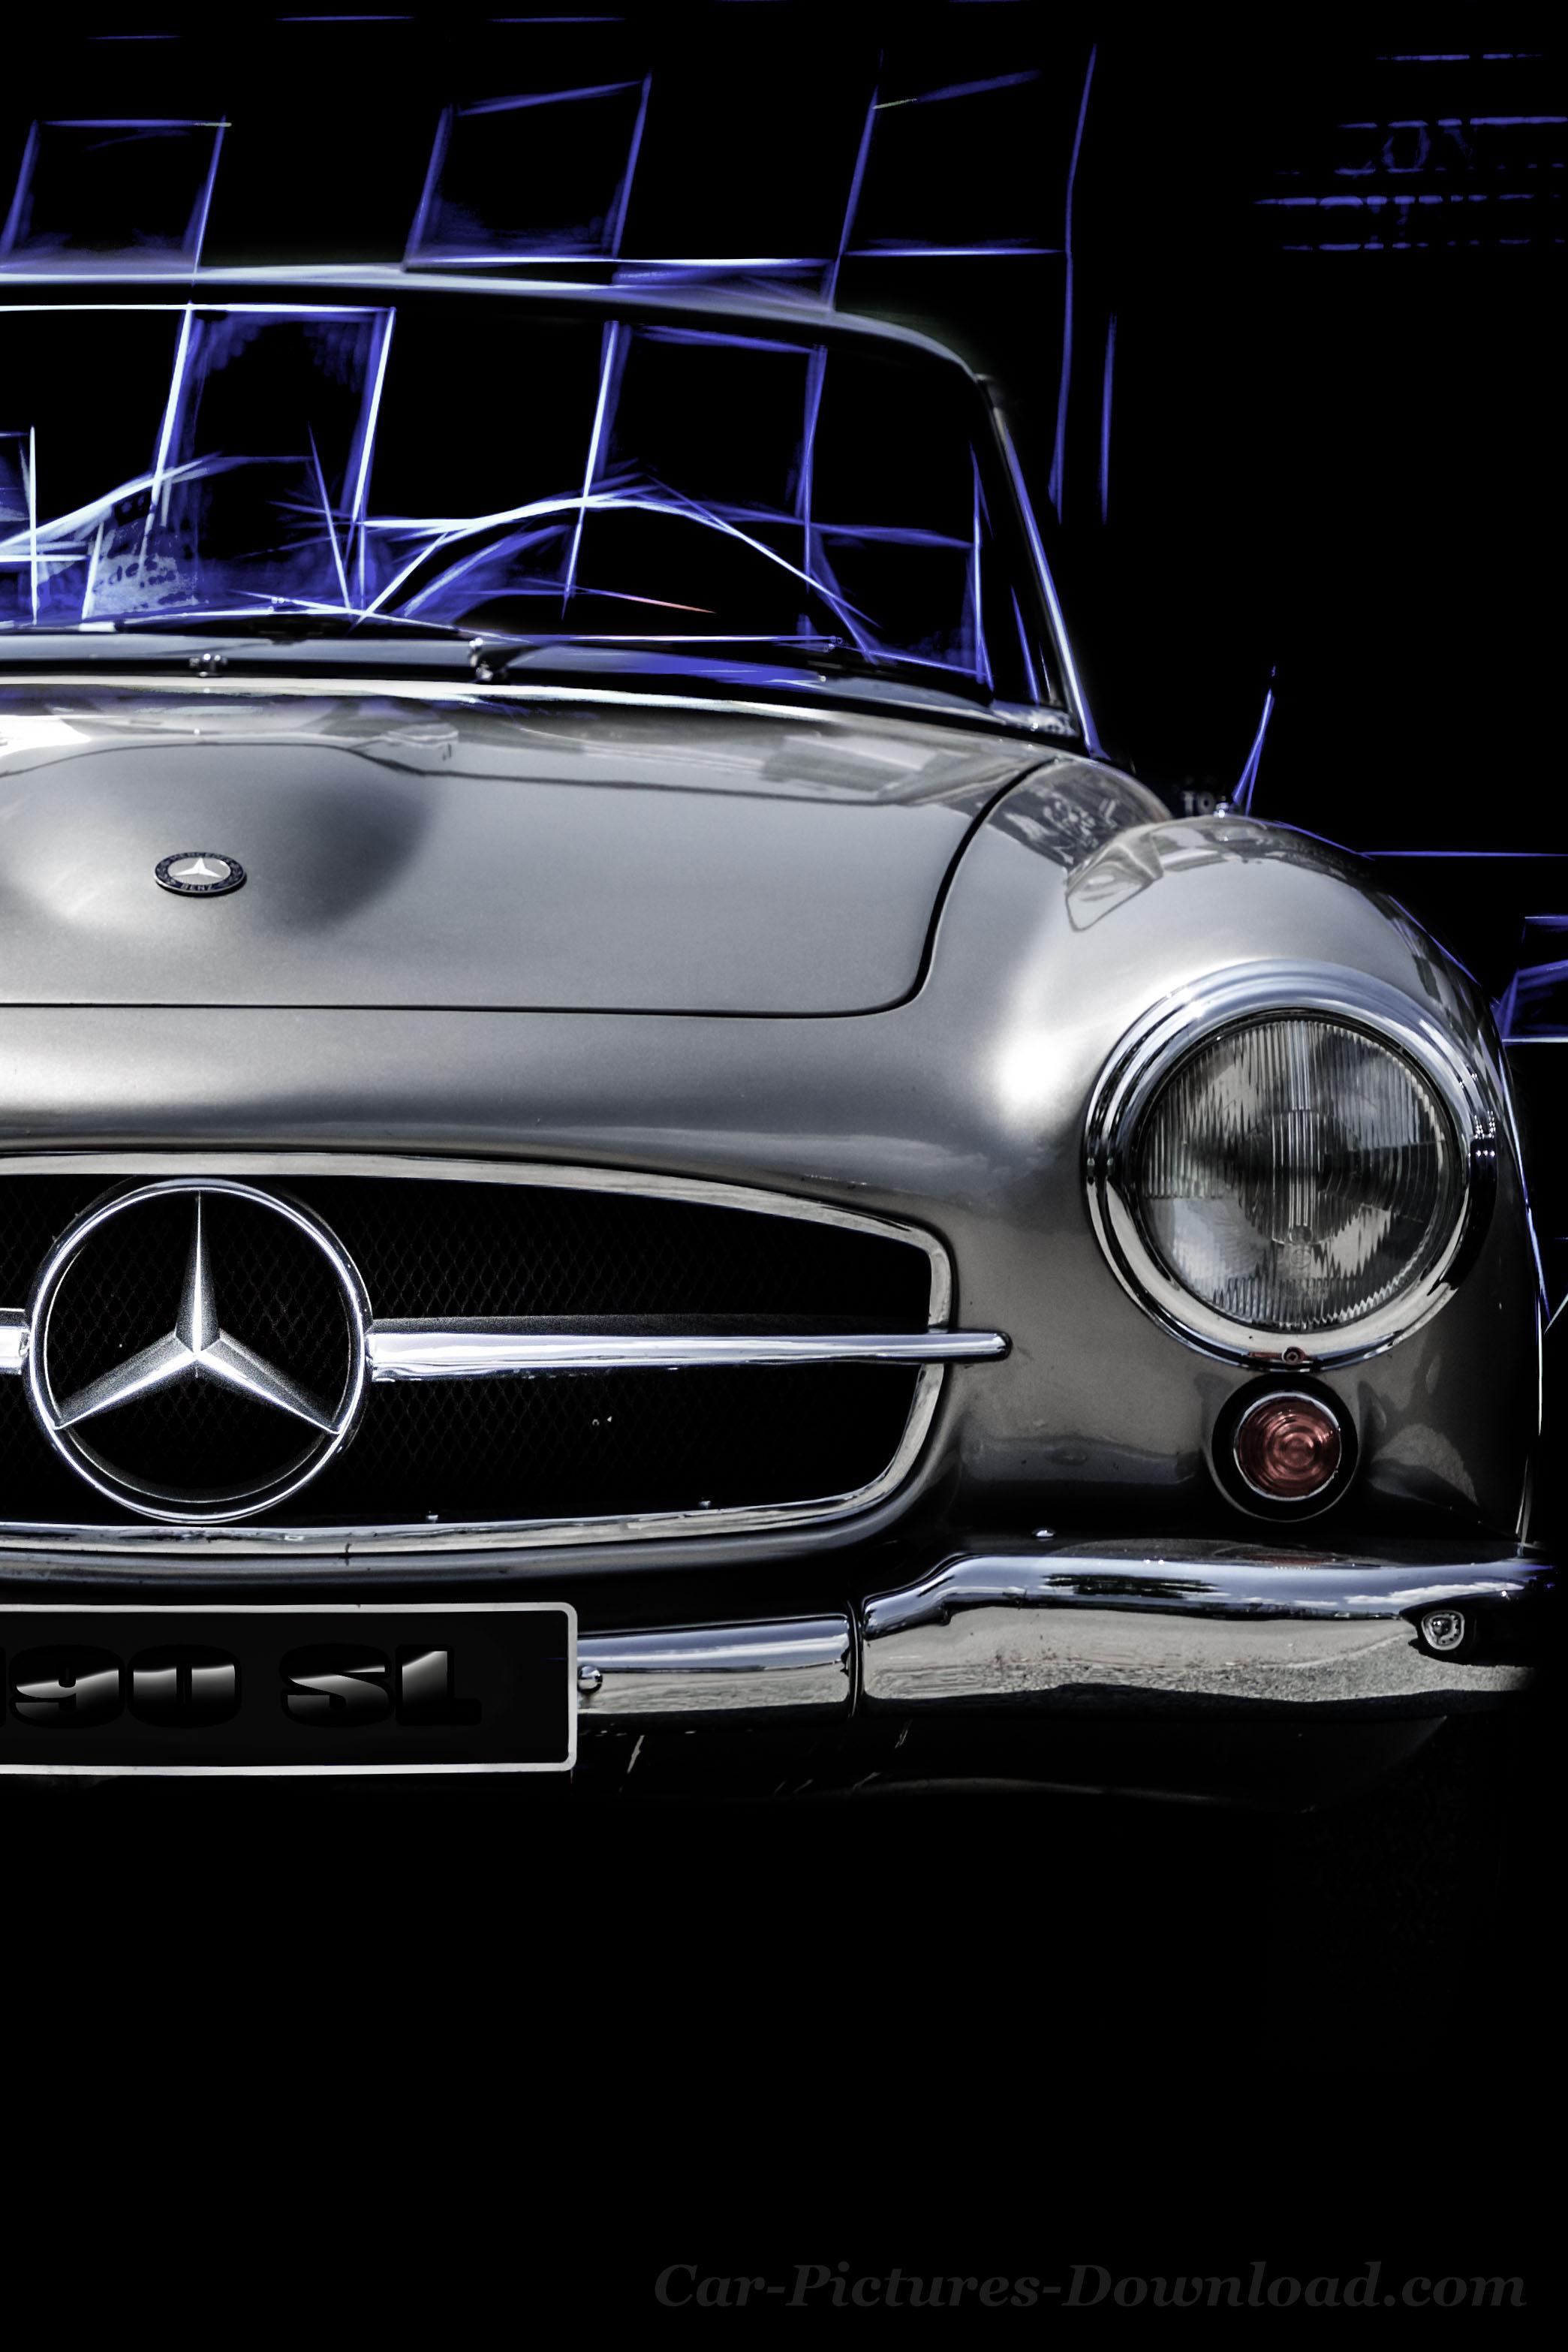 Mercedes Benz Wallpaper Image & Mobile UHD